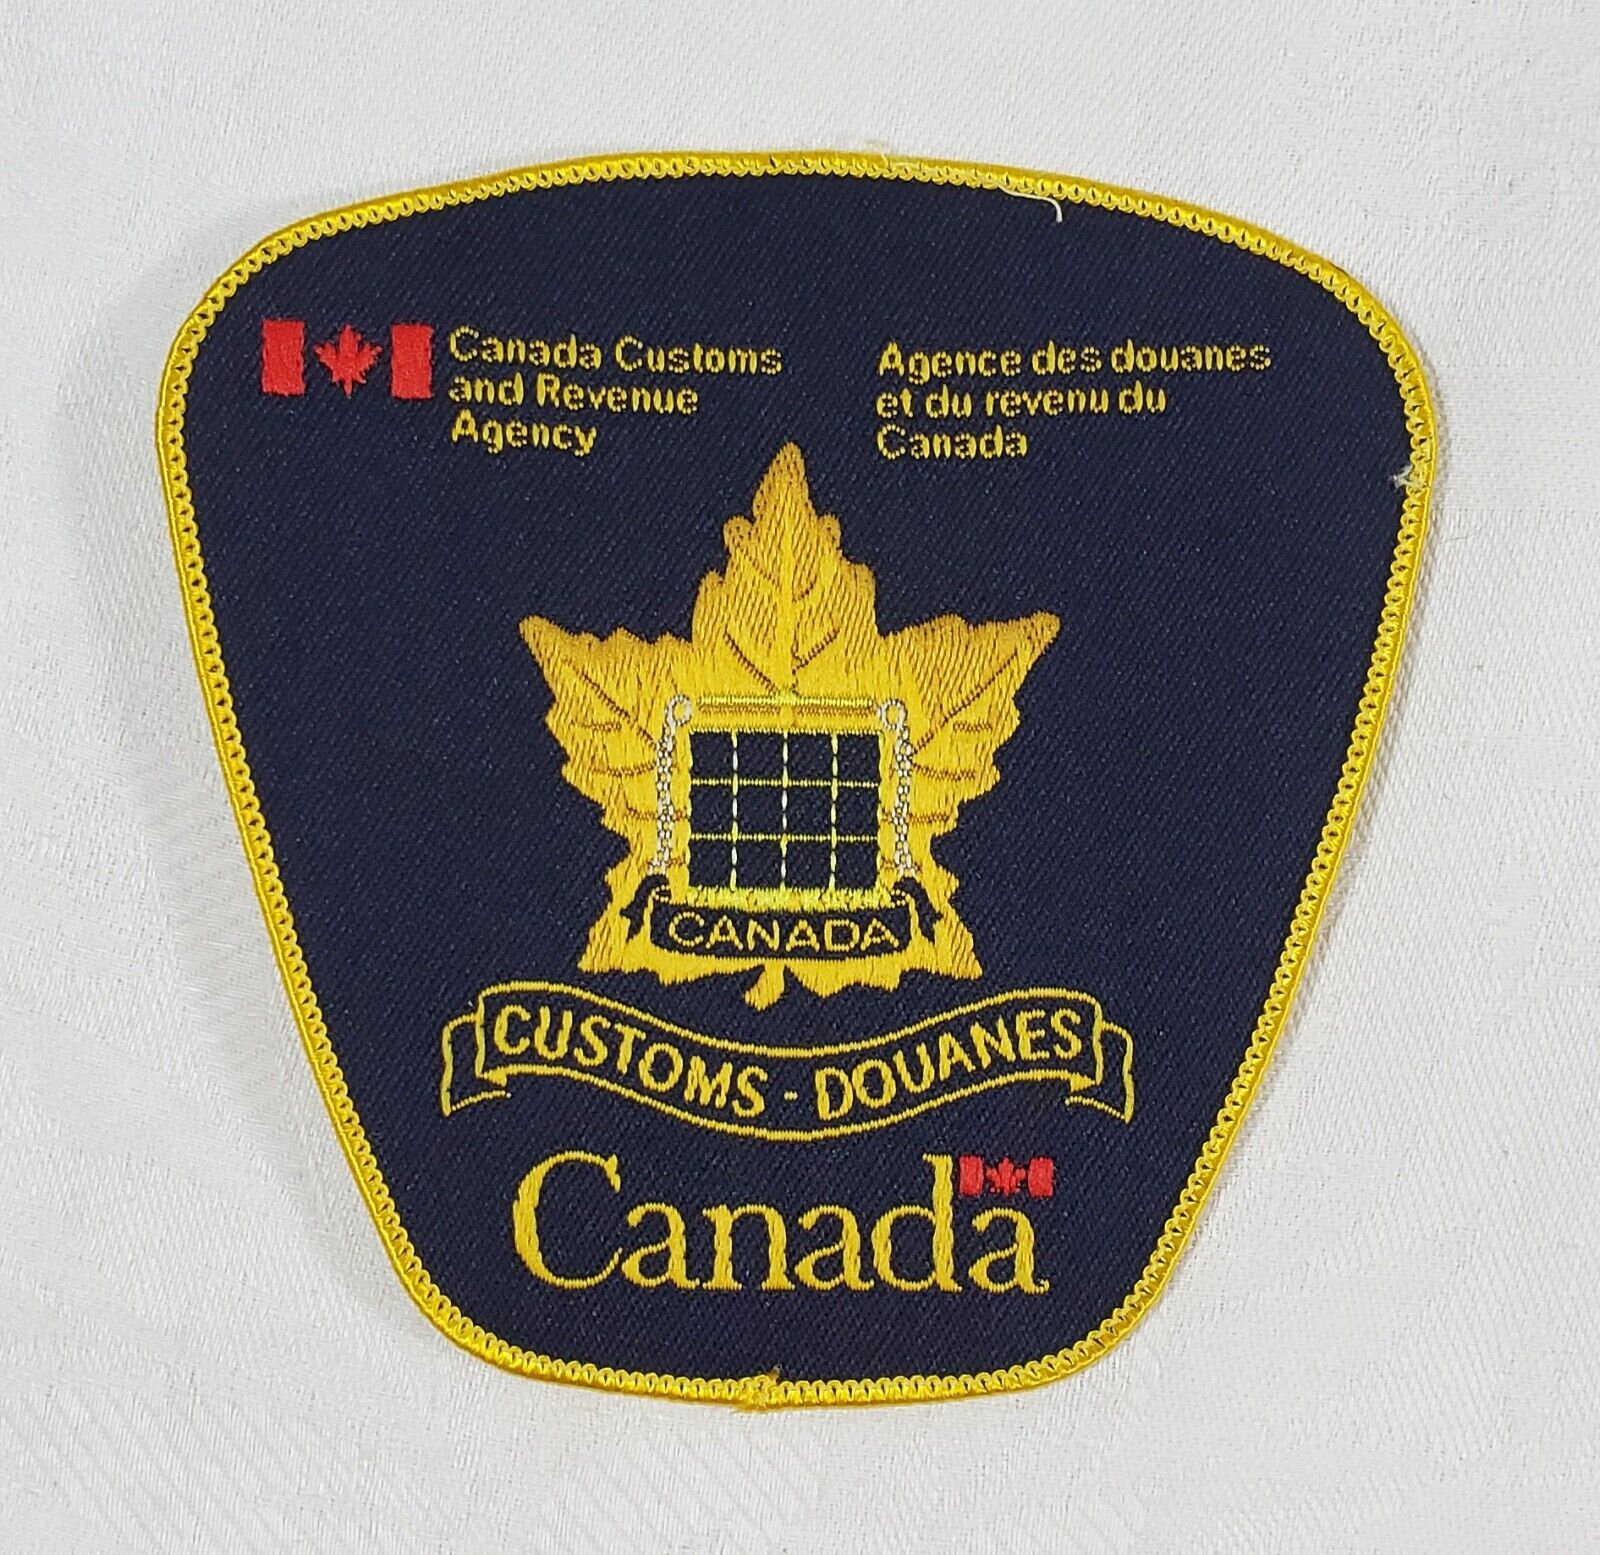 CANADA CUSTOMS & REVENUE AGENCY CANADIAN POLICE SHOULDER PATCH - EXCELLENT SHAPE